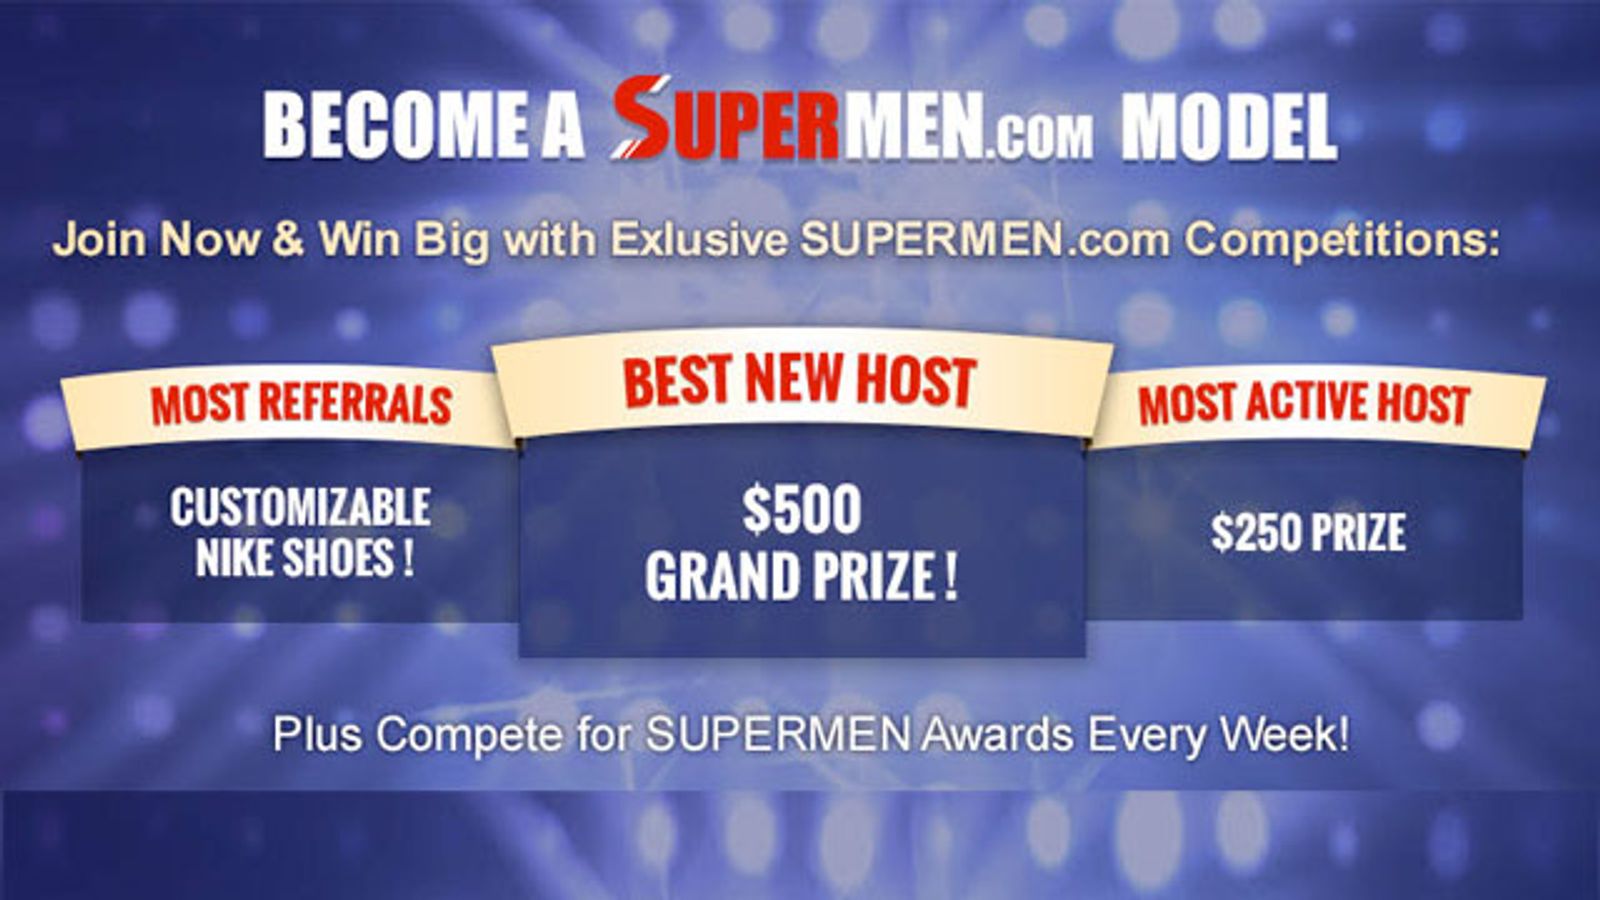 Supermen.com Announces Summer Contests With Cash Prizes